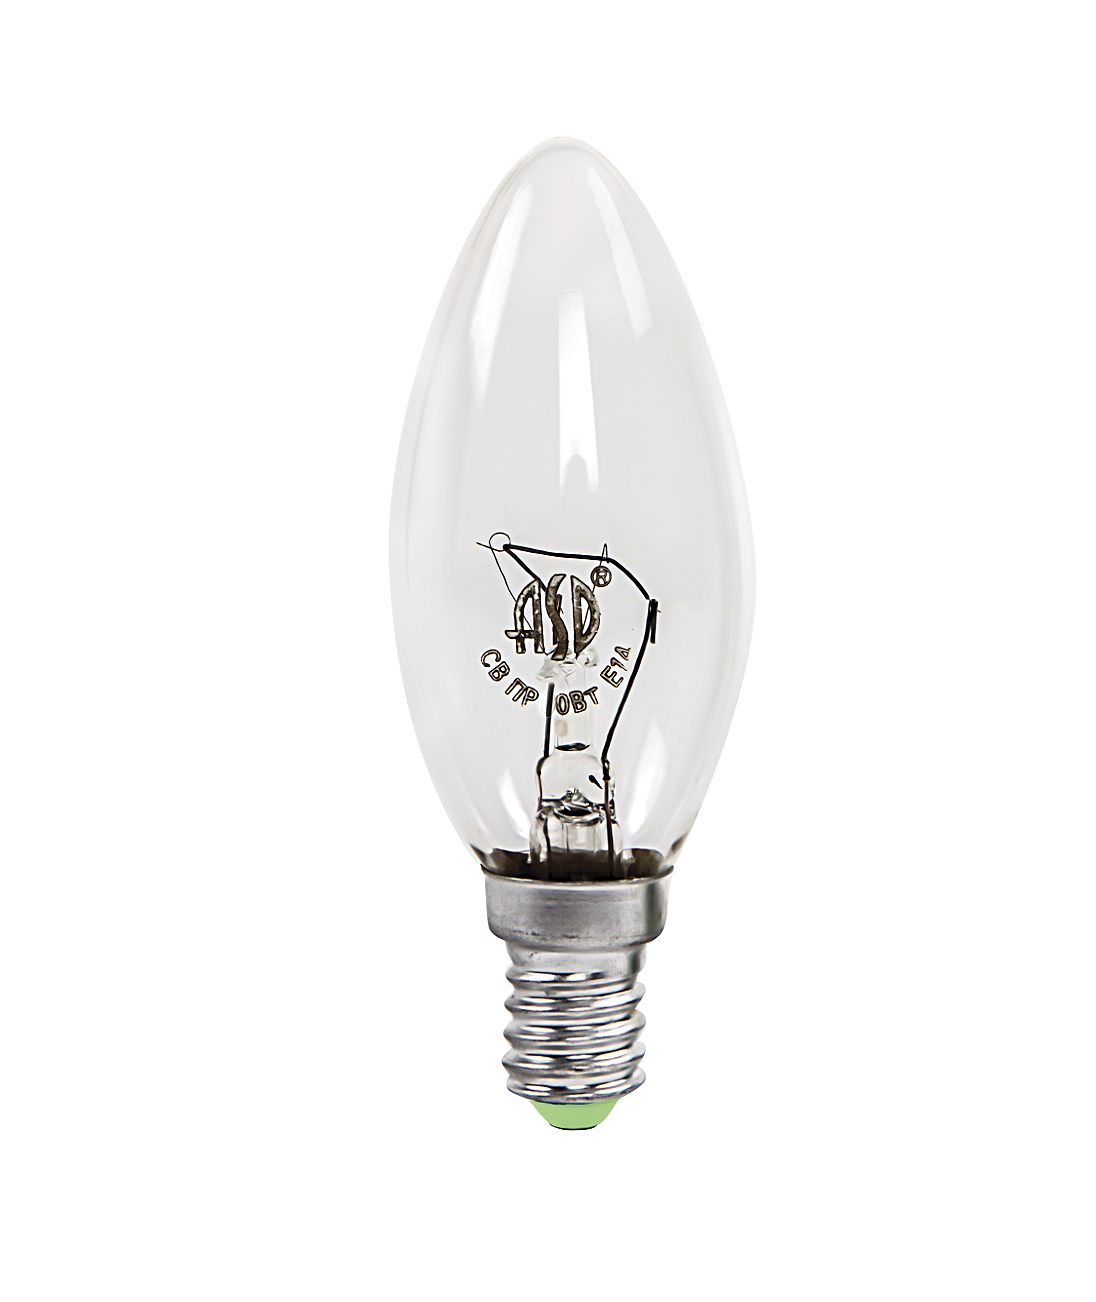 Купить лампа накаливания свеча b35 40вт 230в е14 прозрачная 380лм asd, 100% качество, в наличии на L-ed.ru